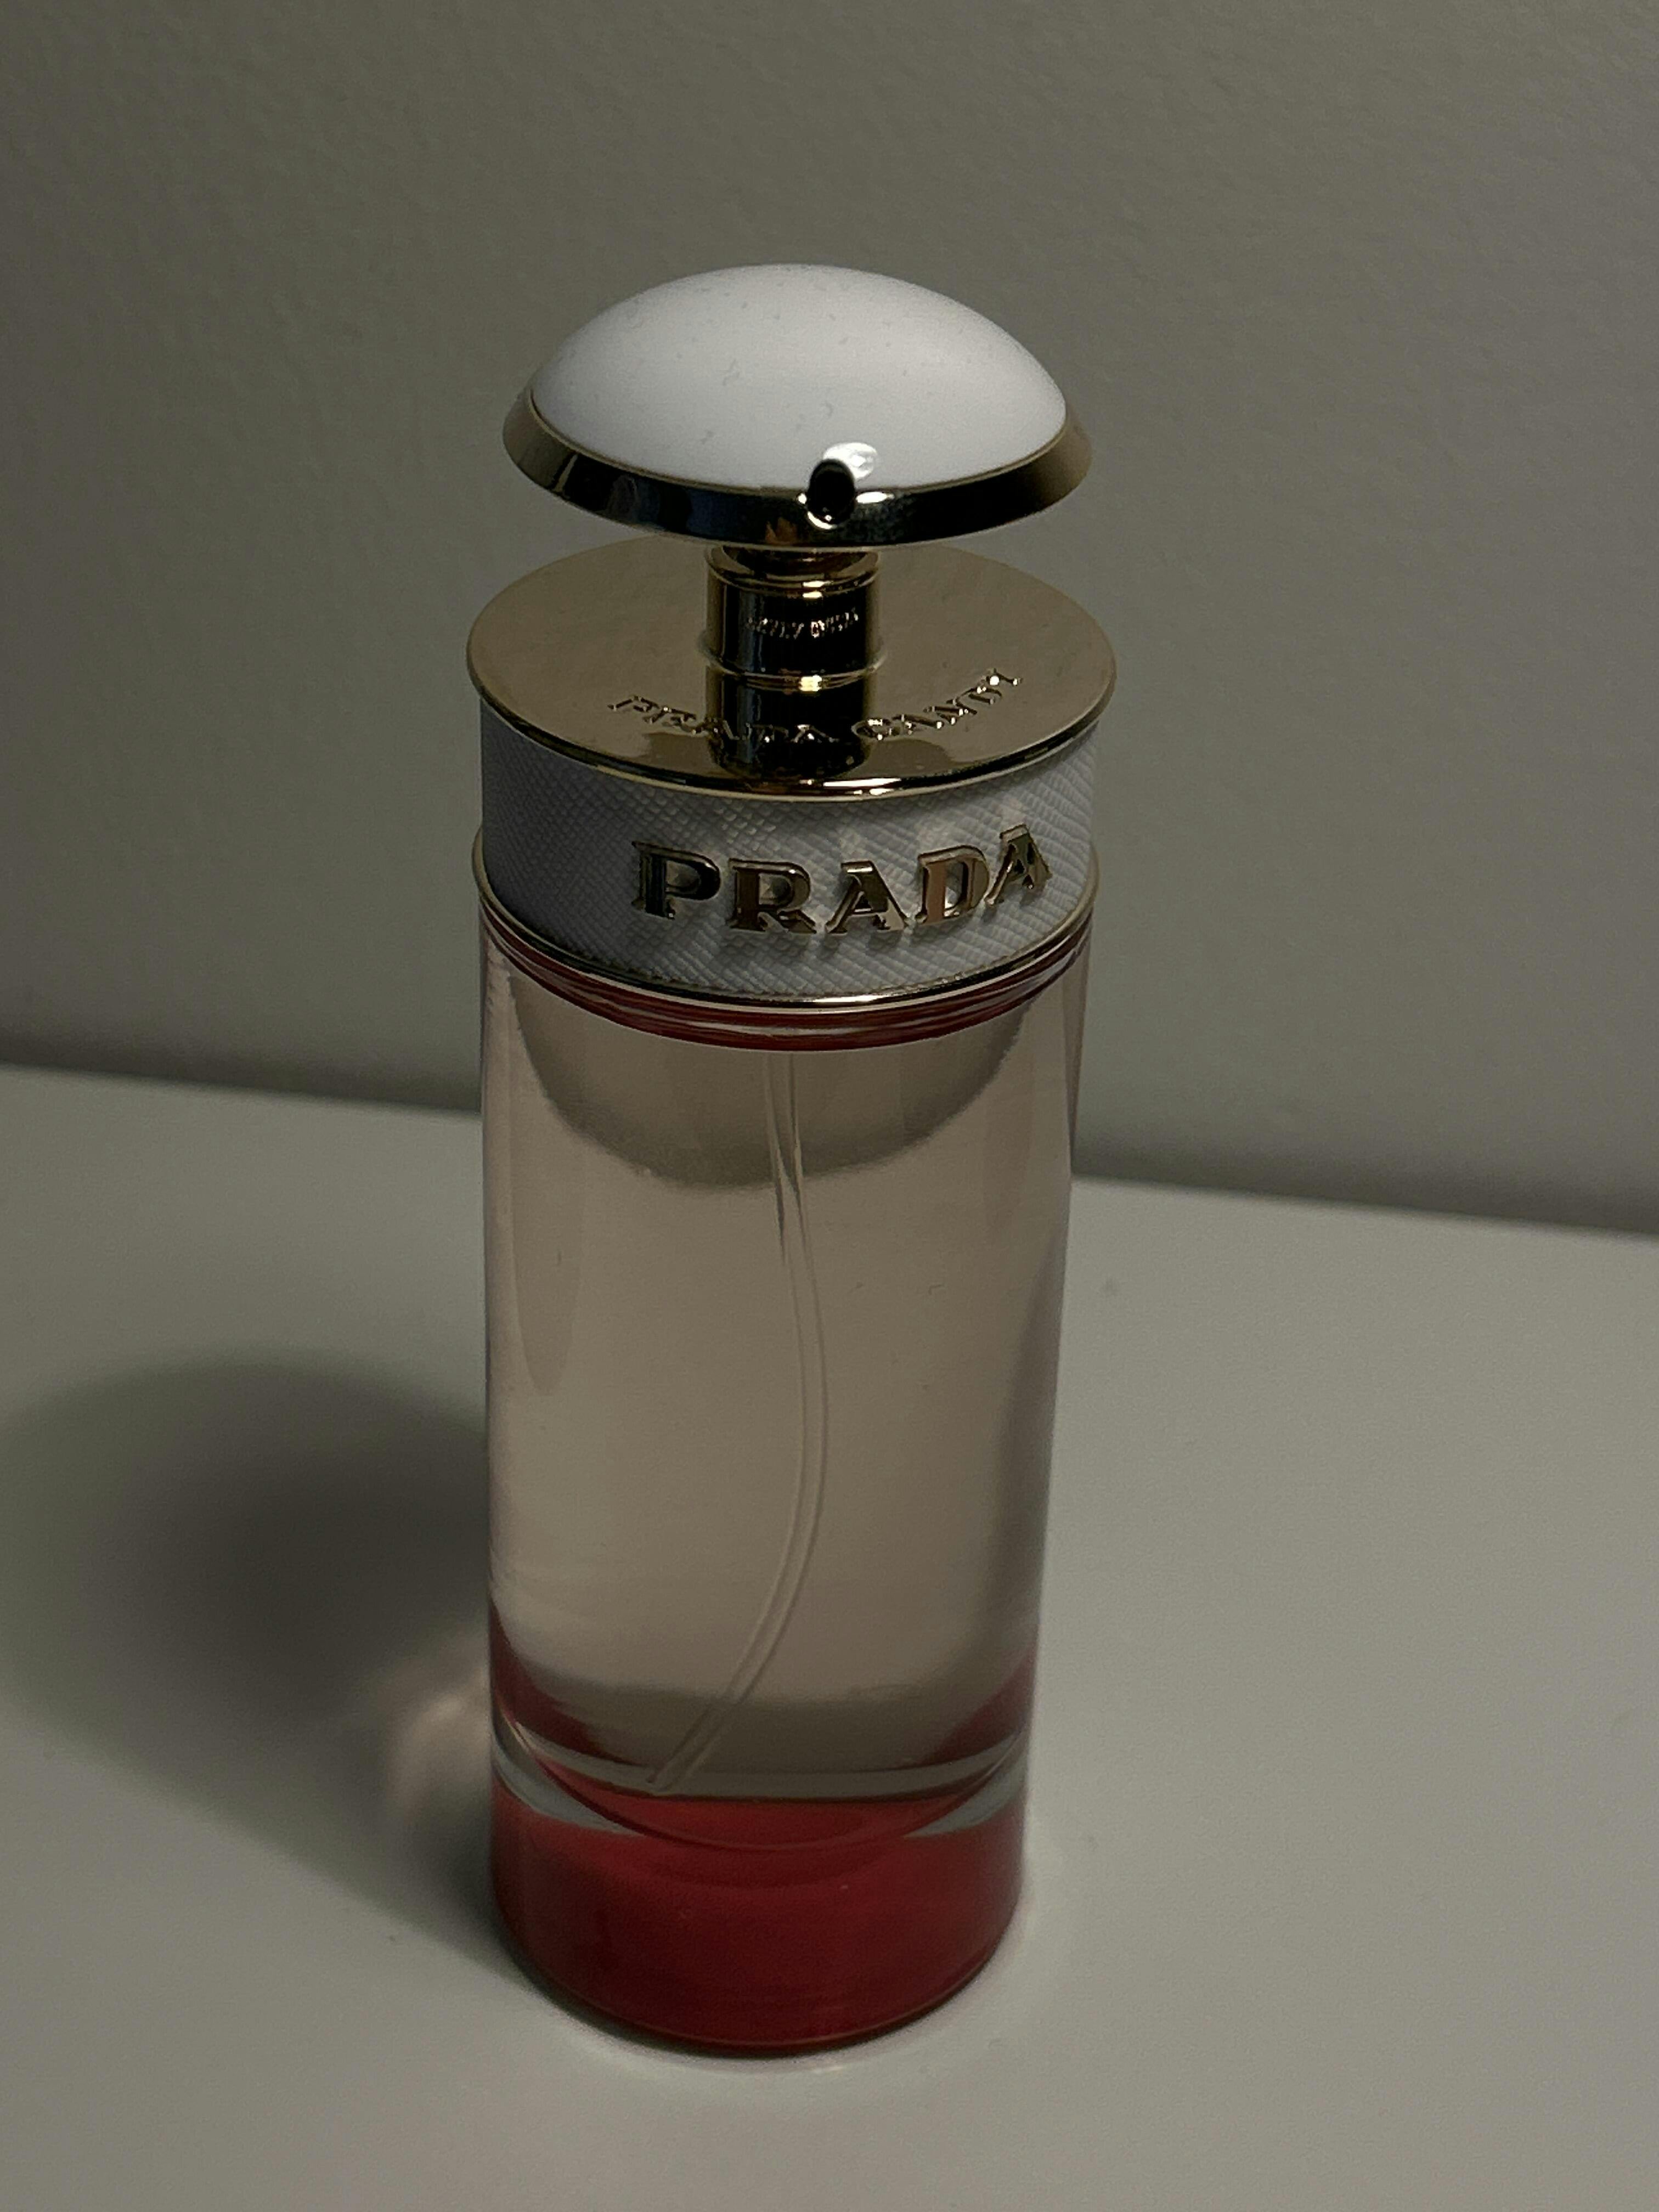 Prada Candy Kiss Perfume for Women in Canada – Perfumeonline.ca